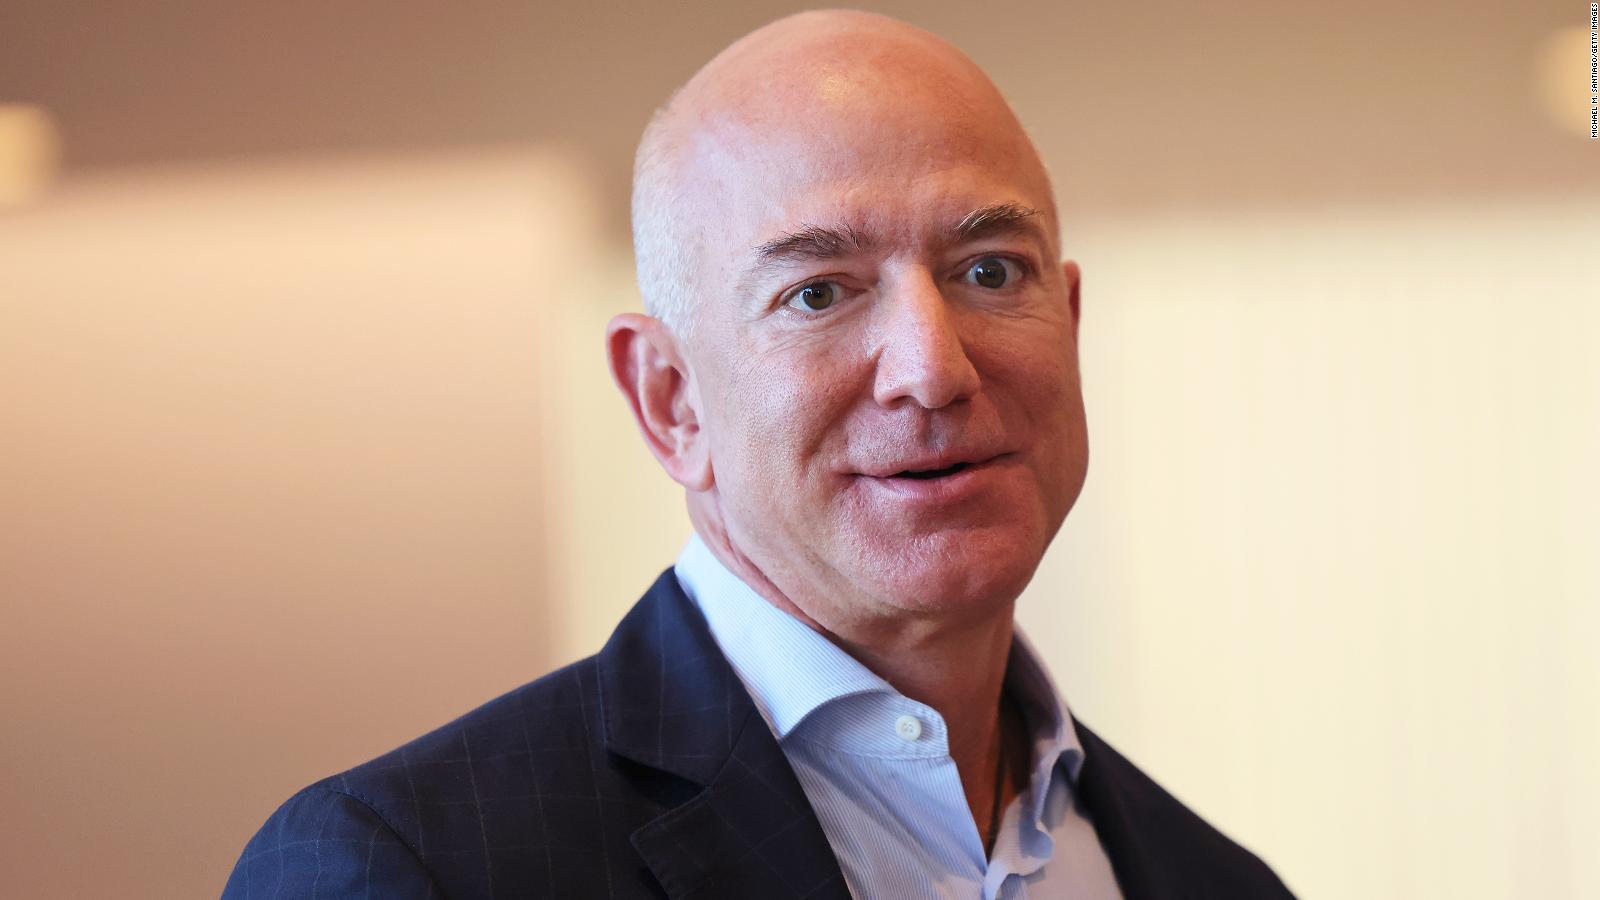 How many companies does Jeff Bezos own?